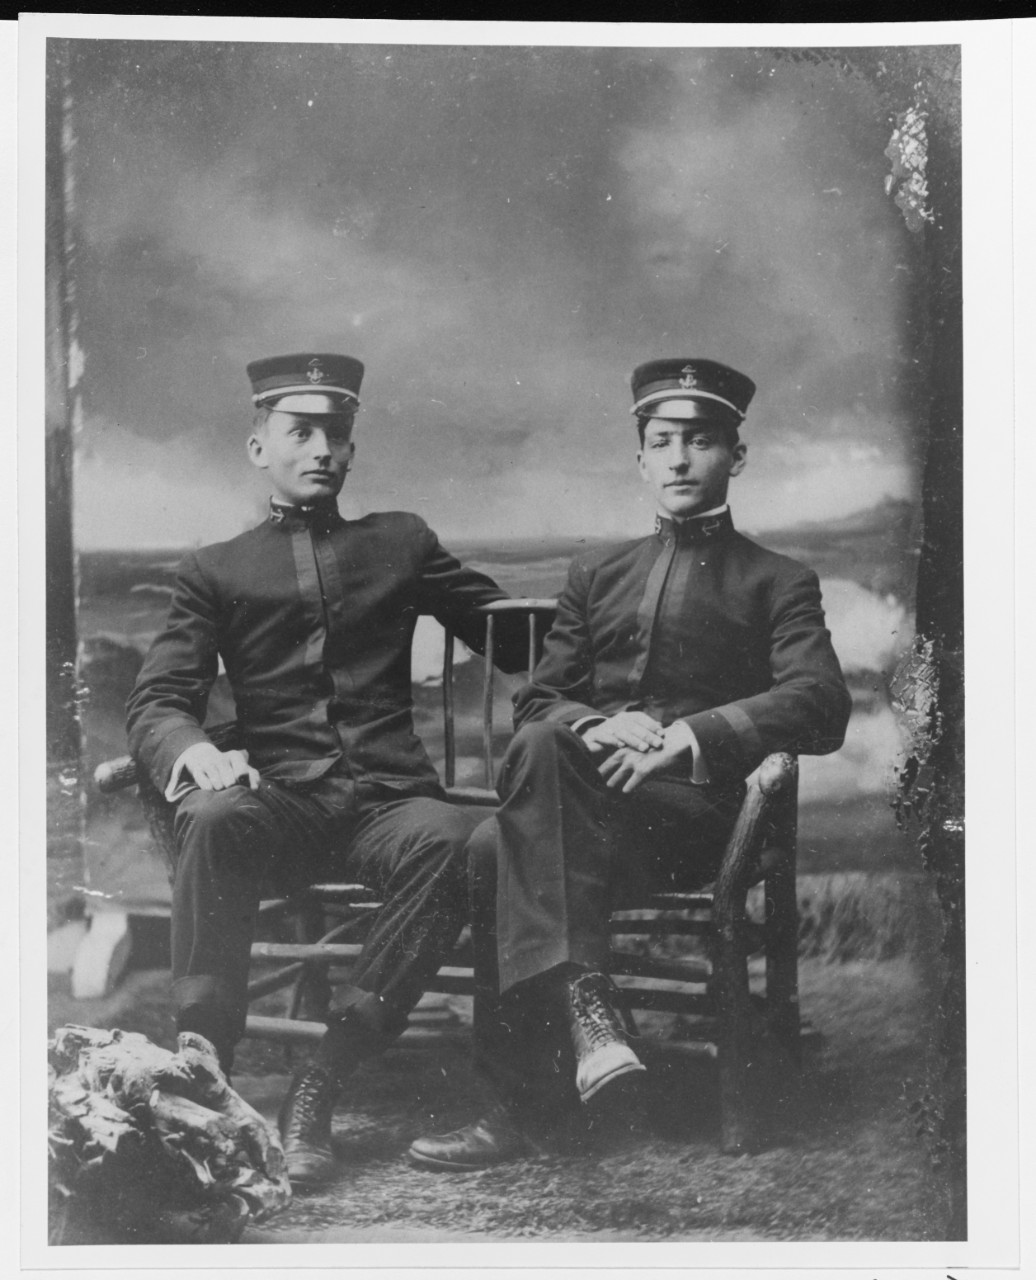 Midshipmen Frank A. Braisted and James B. Glennon